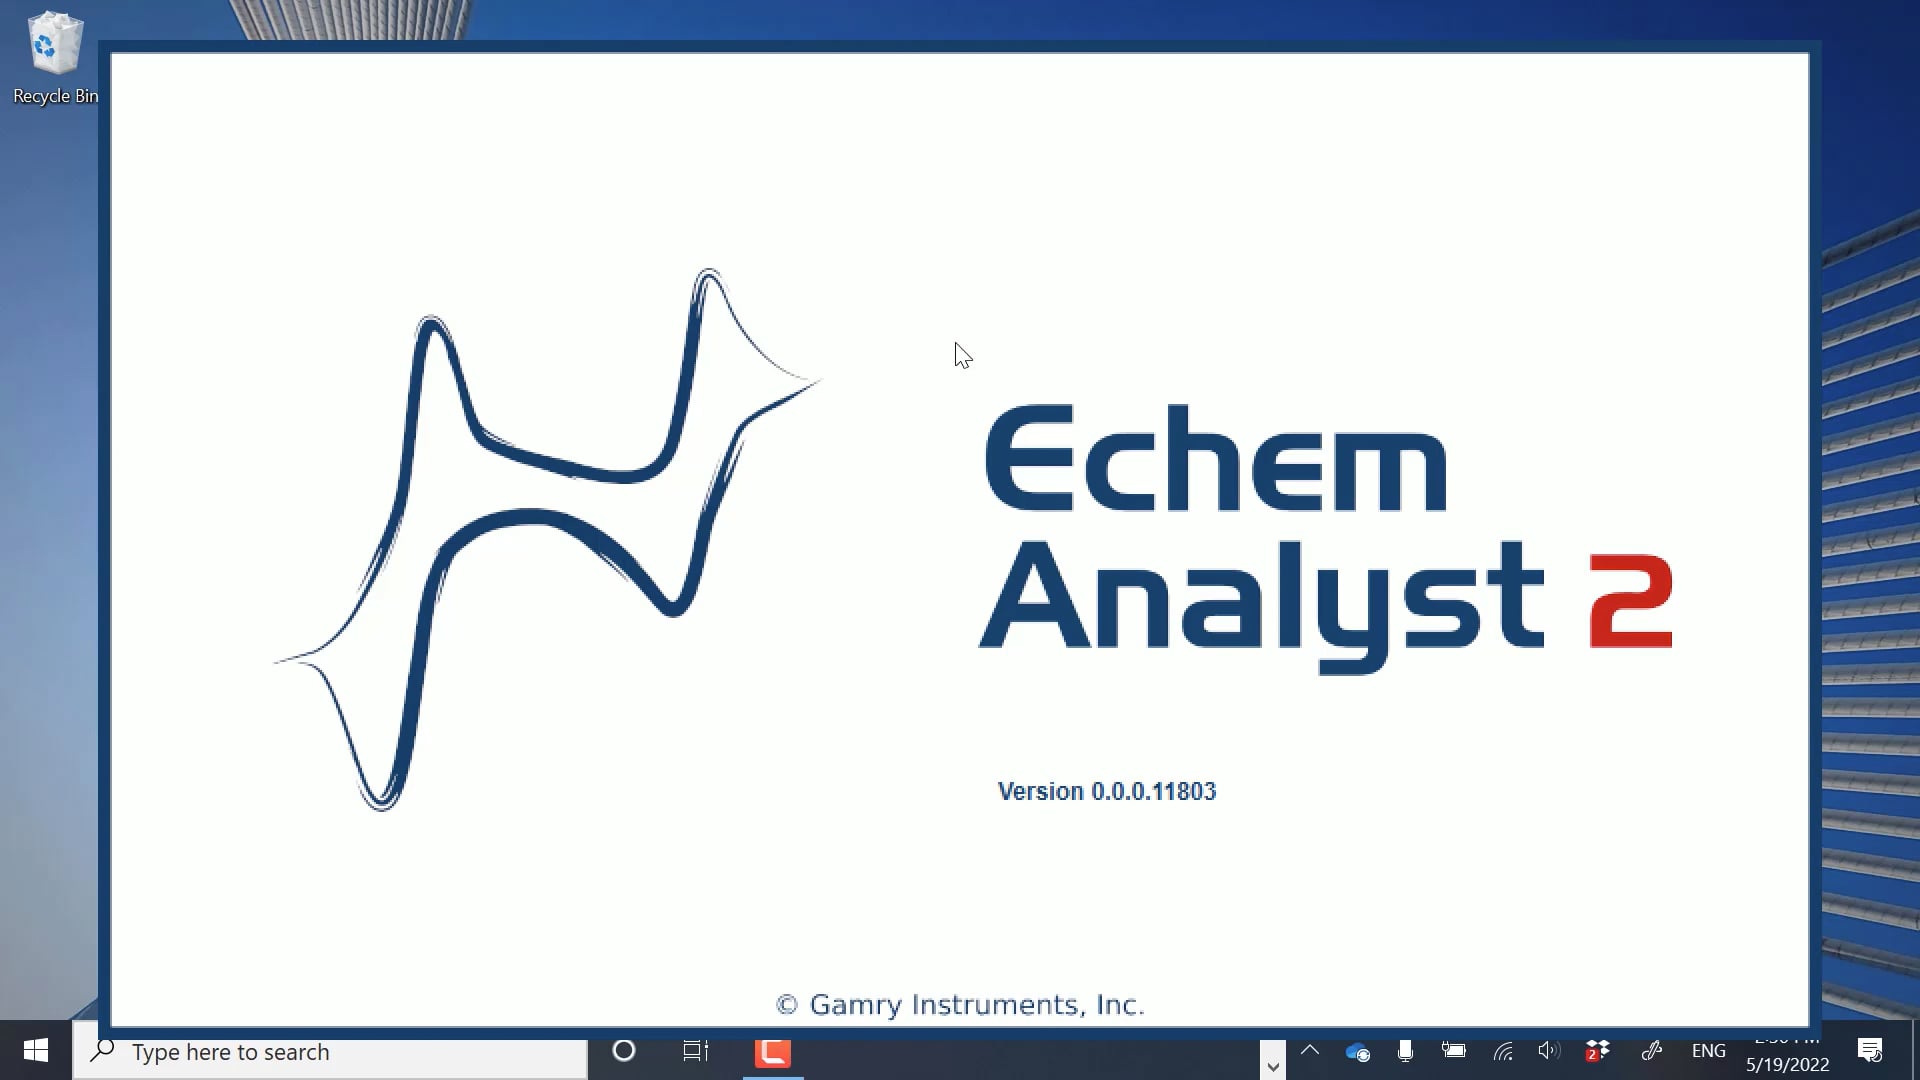 Introduction to Echem Analyst 2